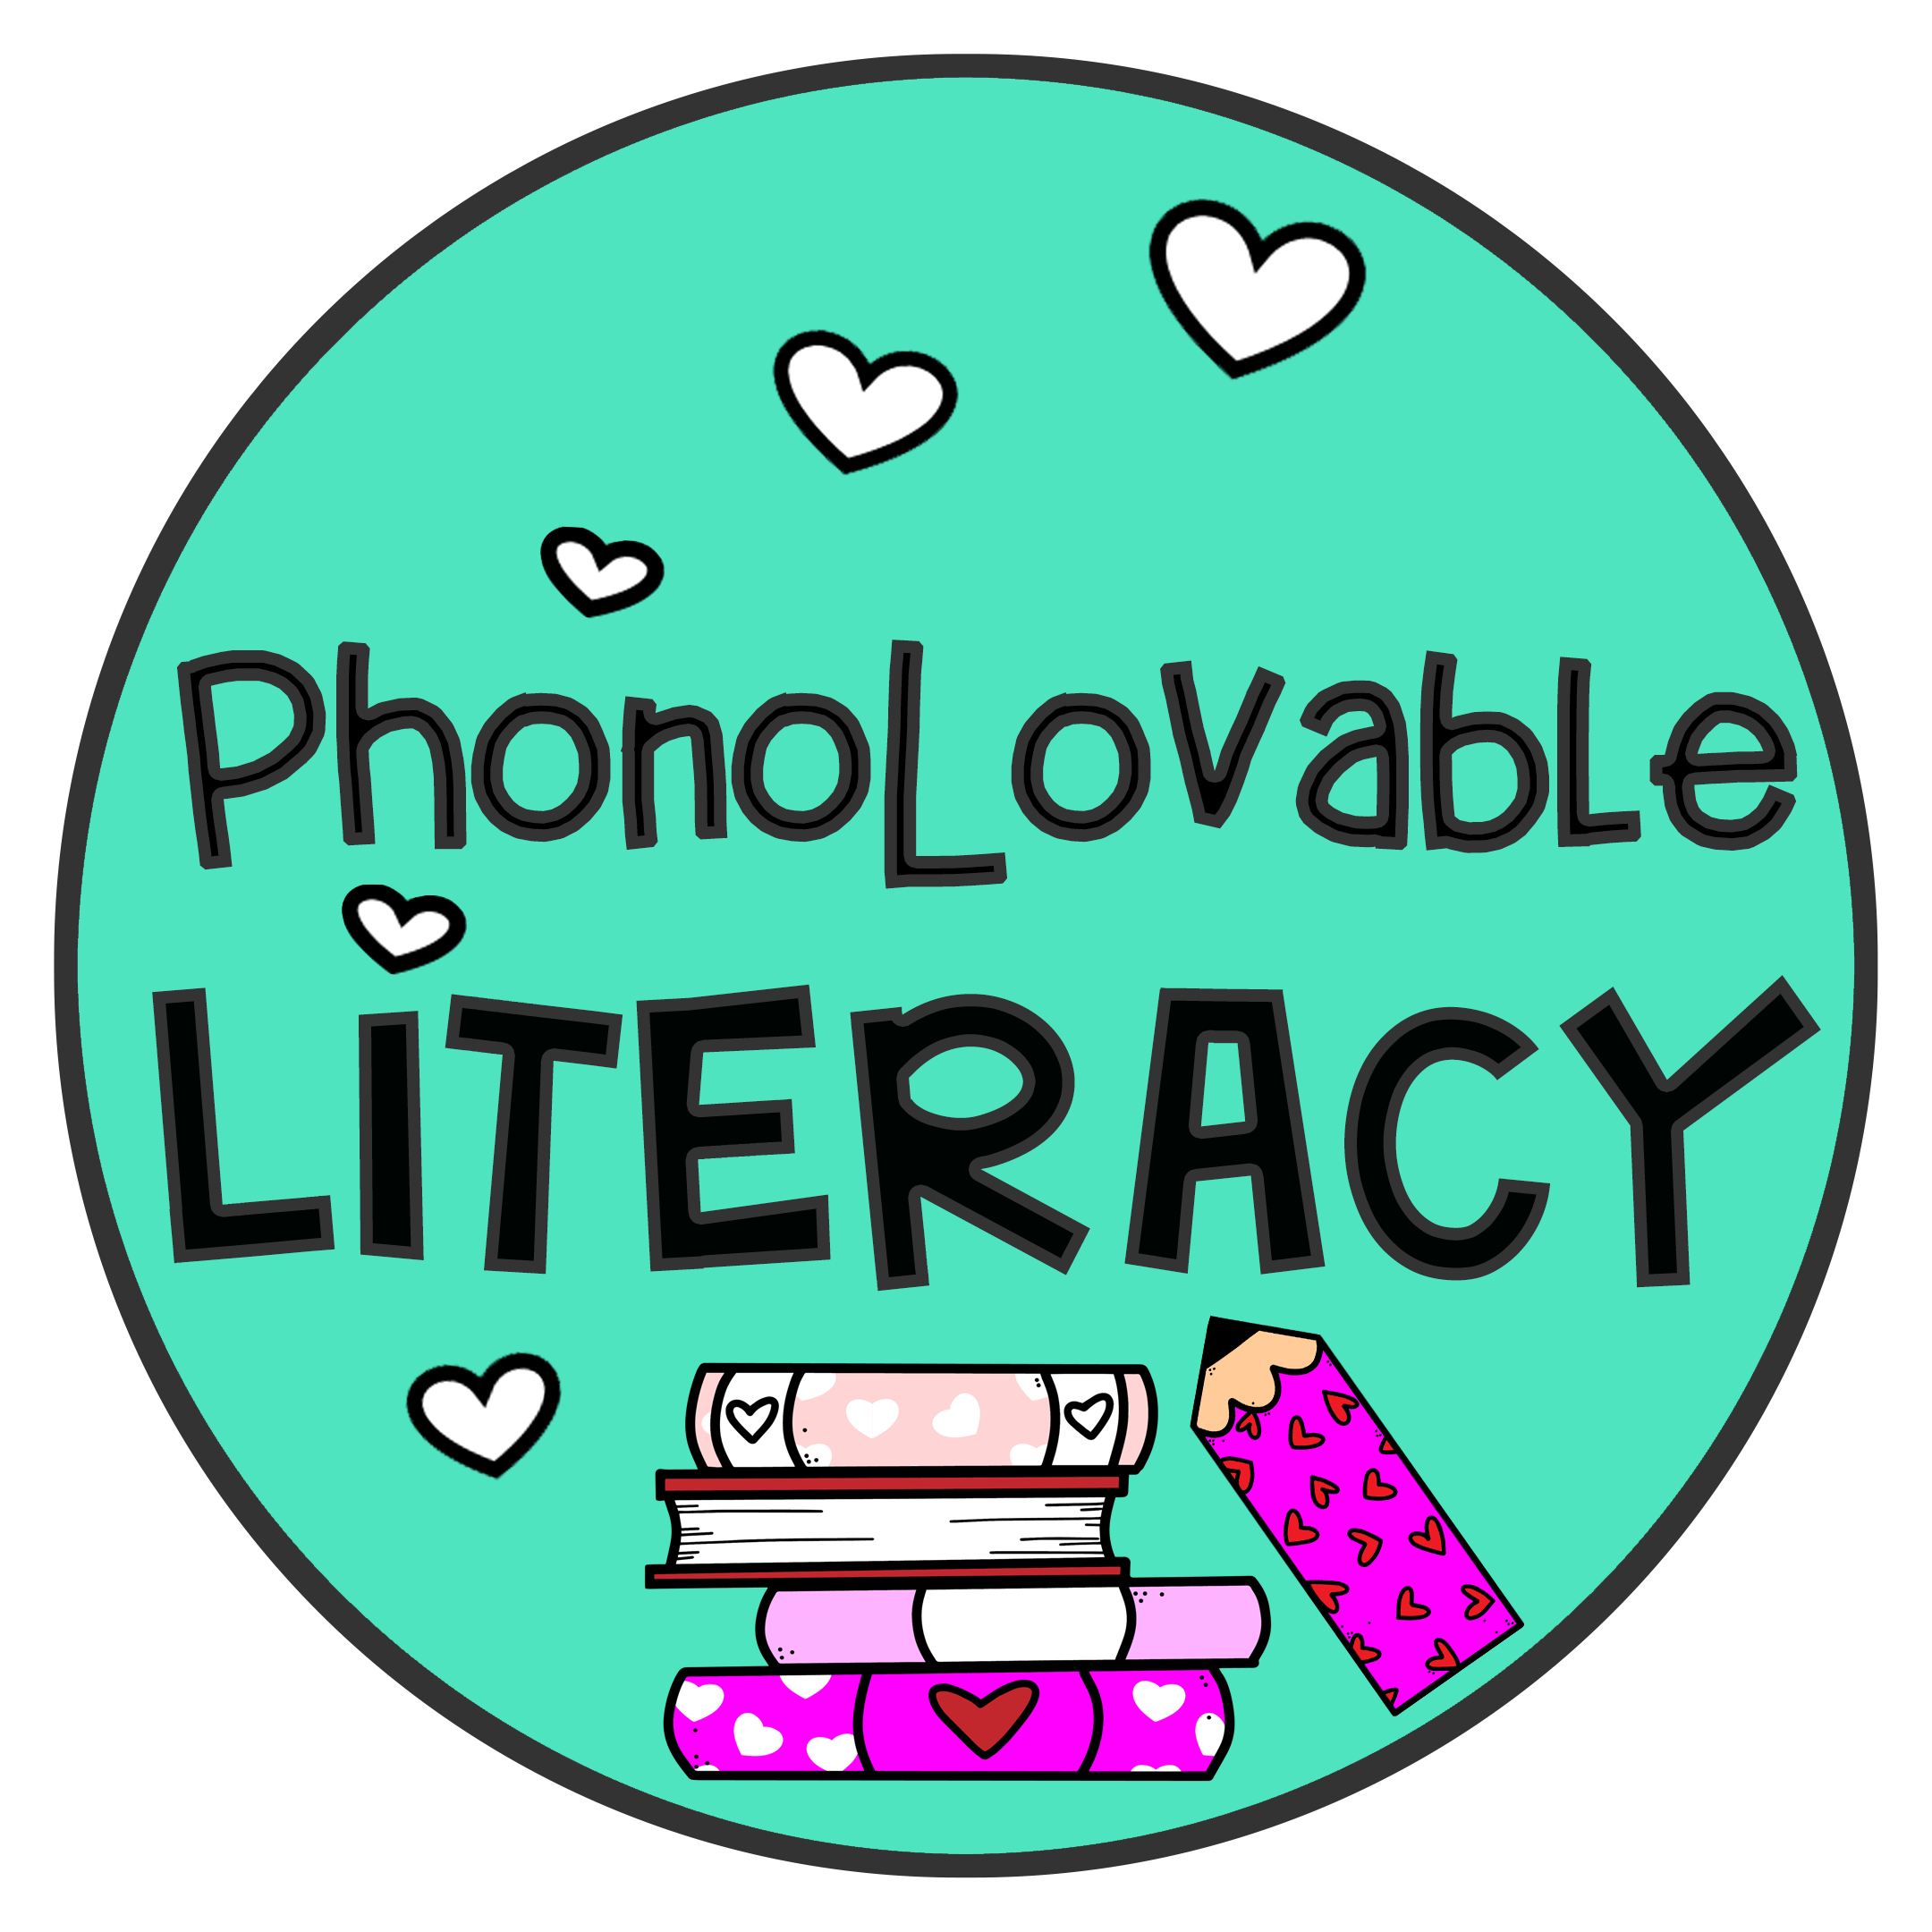 PhonoLovable Literacy